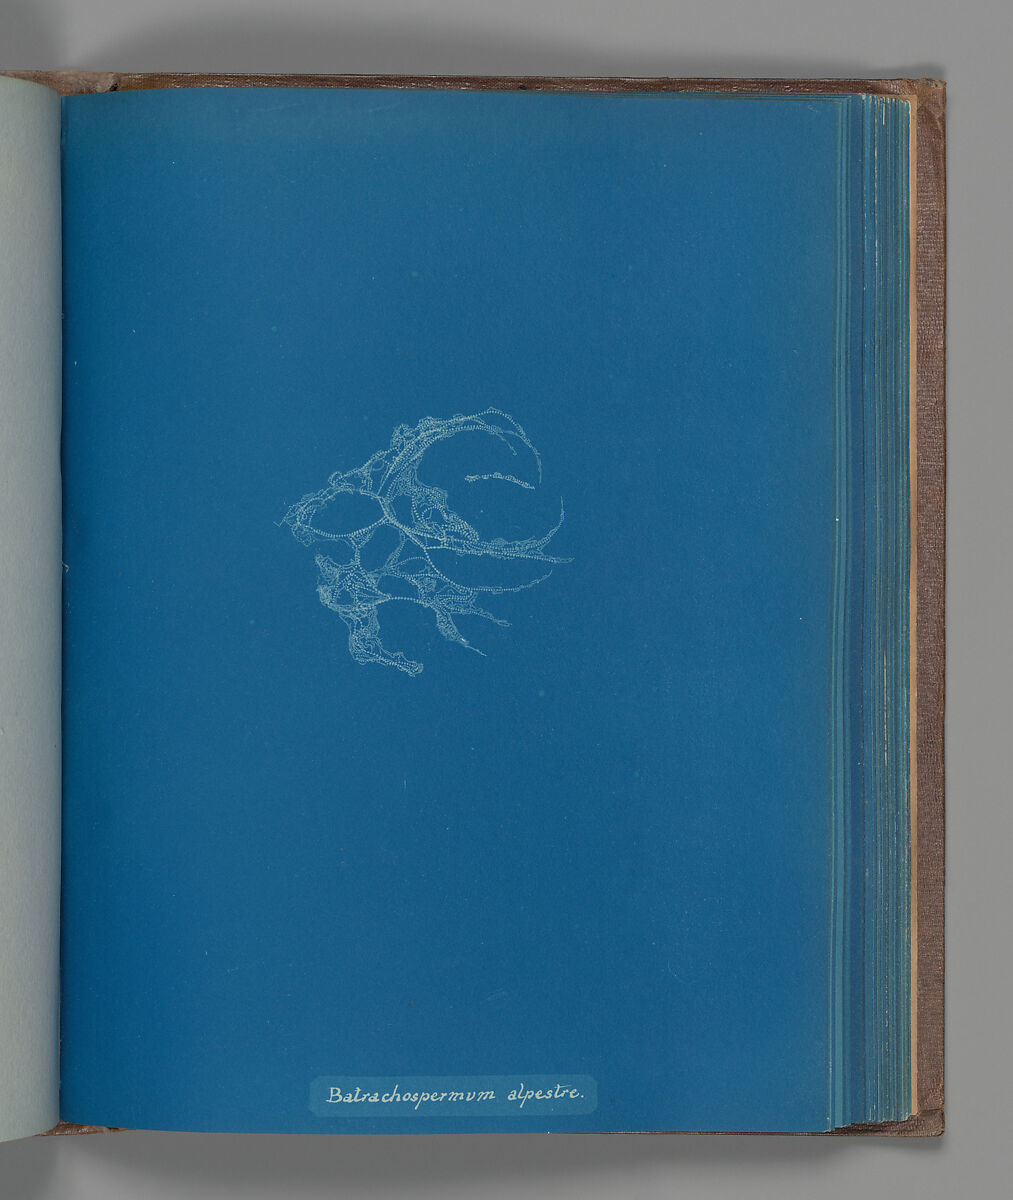 Batrachospermum alpestre, Anna Atkins (British, 1799–1871), Cyanotype 